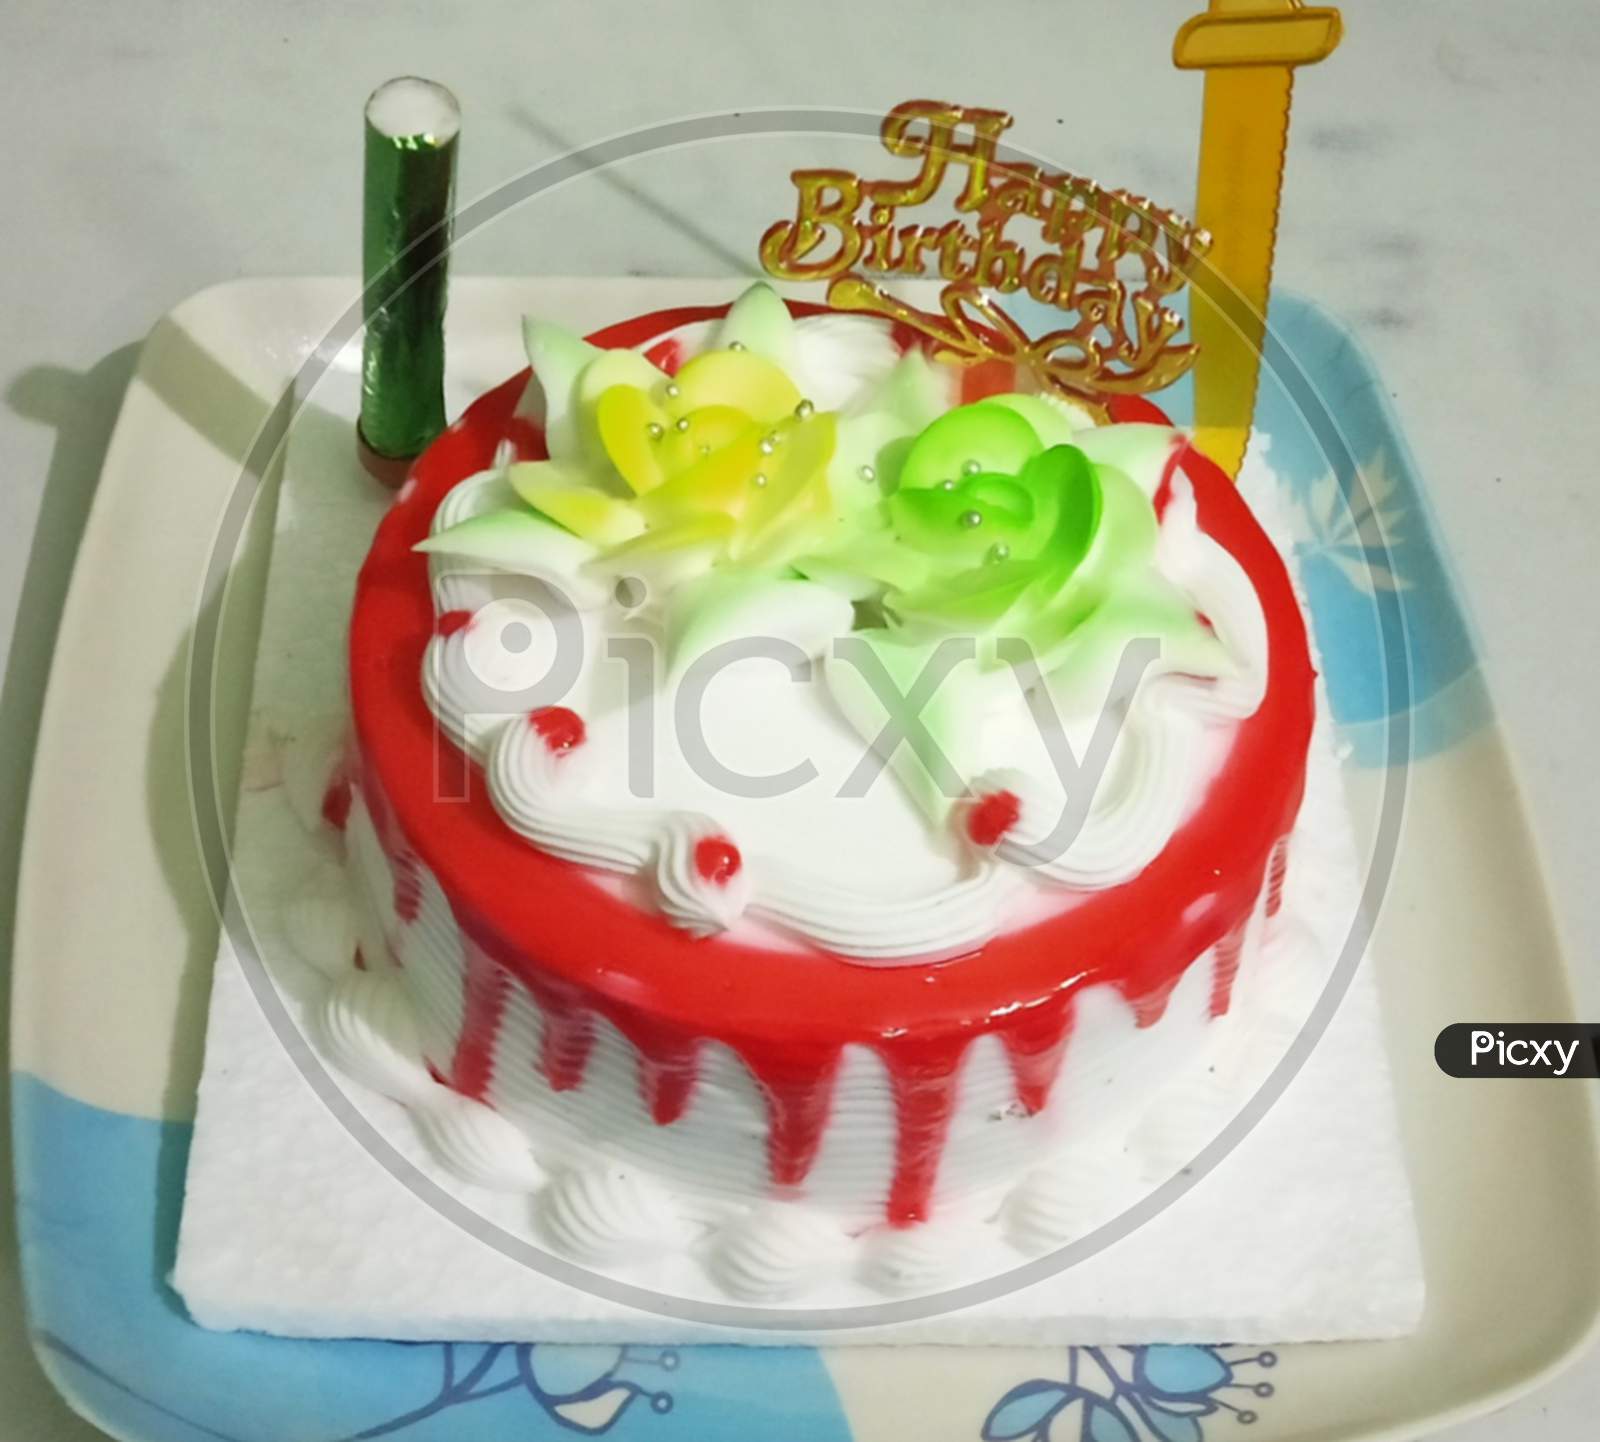 Aggregate more than 104 ashish happy birthday cake - in.eteachers